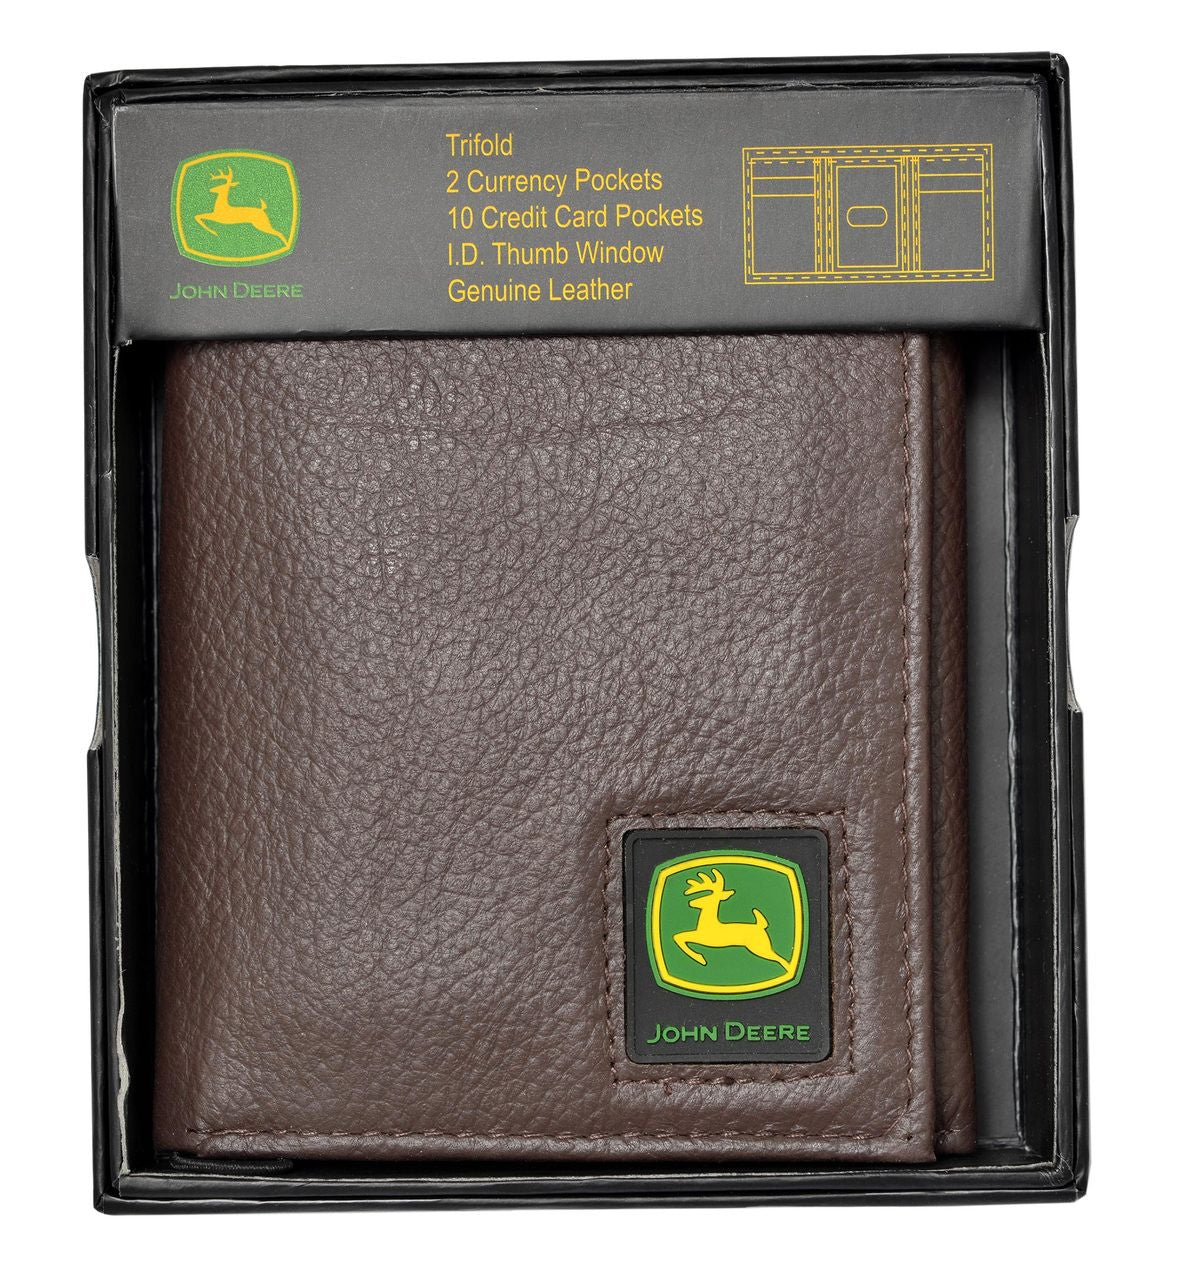 John Deere Pebble Grain Leather TriFold Wallet - Brown - 4012000-200